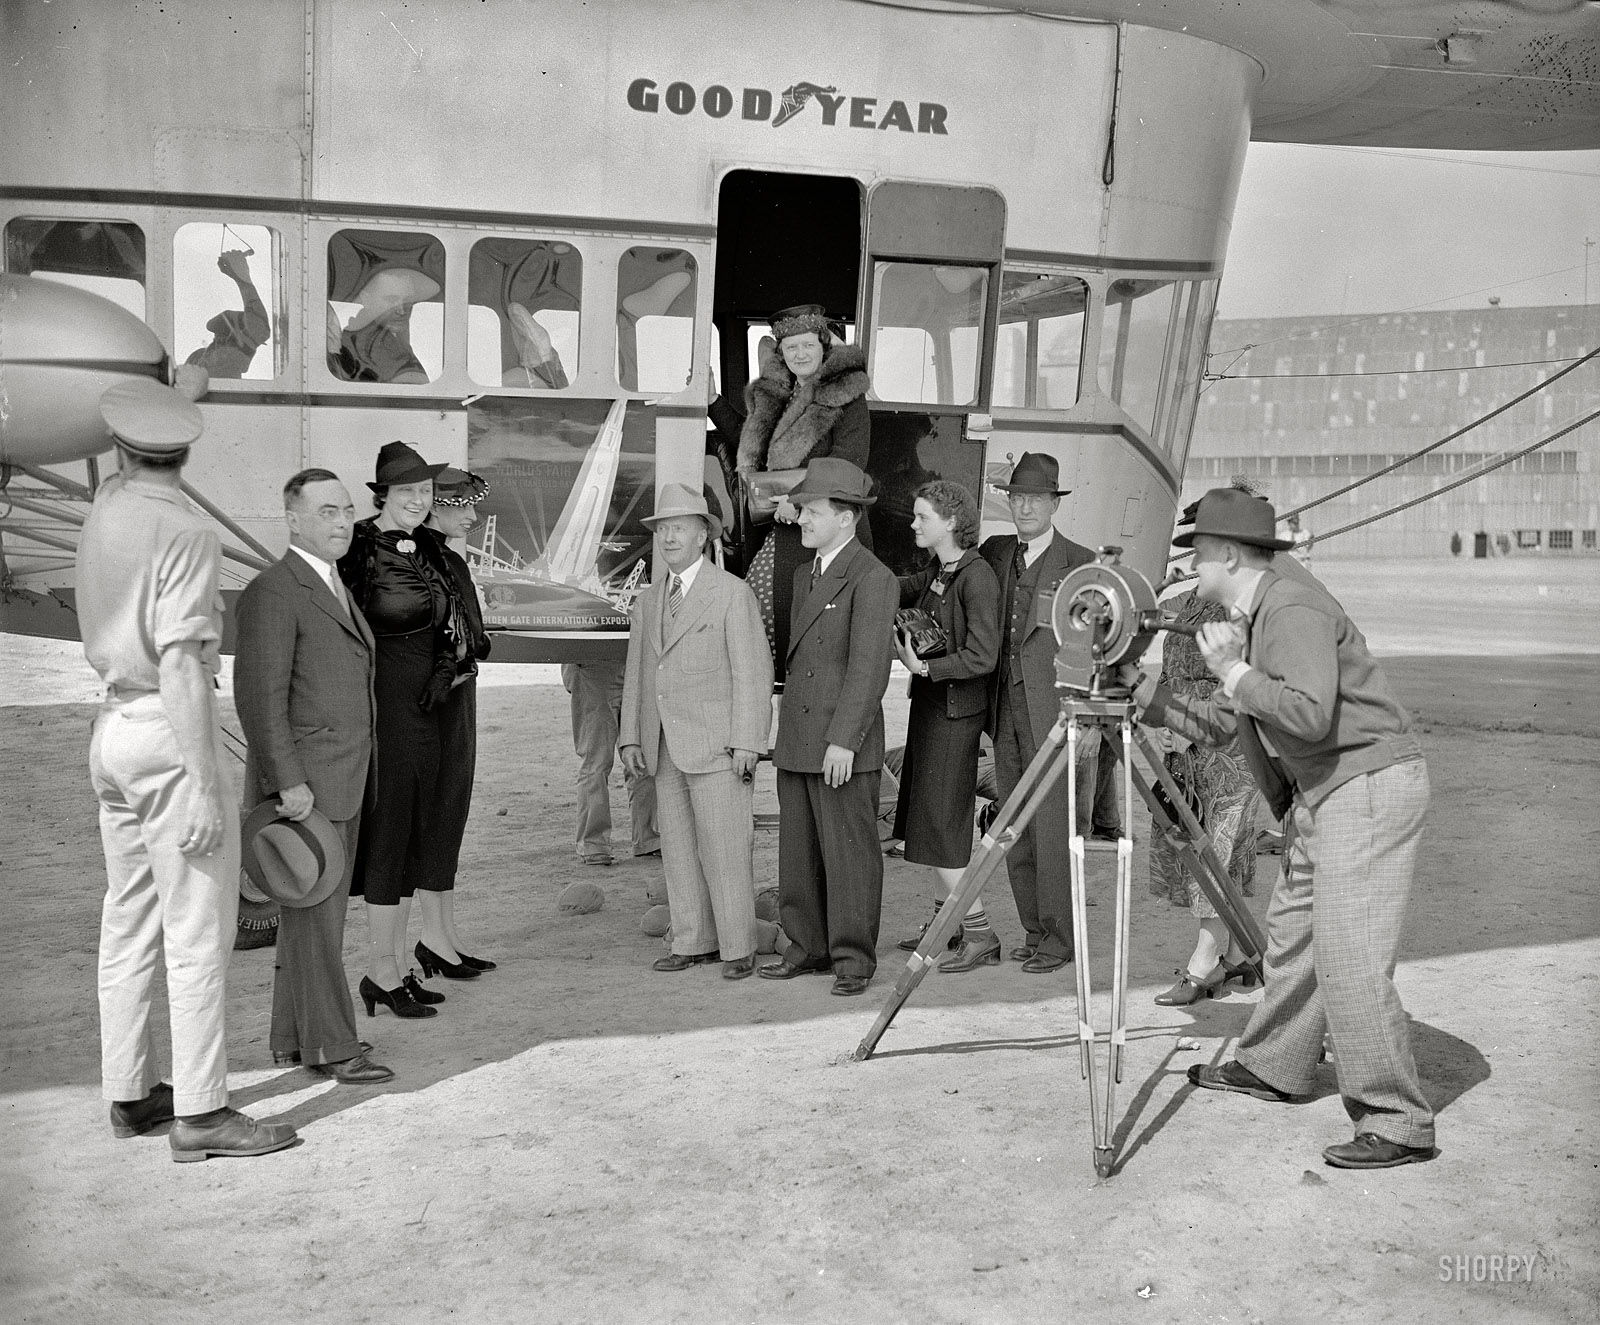 April 13, 1938. Washington, D.C. "Goodyear Blimp, Golden Gate." Promoting the World's Fair in San Francisco. Harris & Ewing glass negative. View full size.